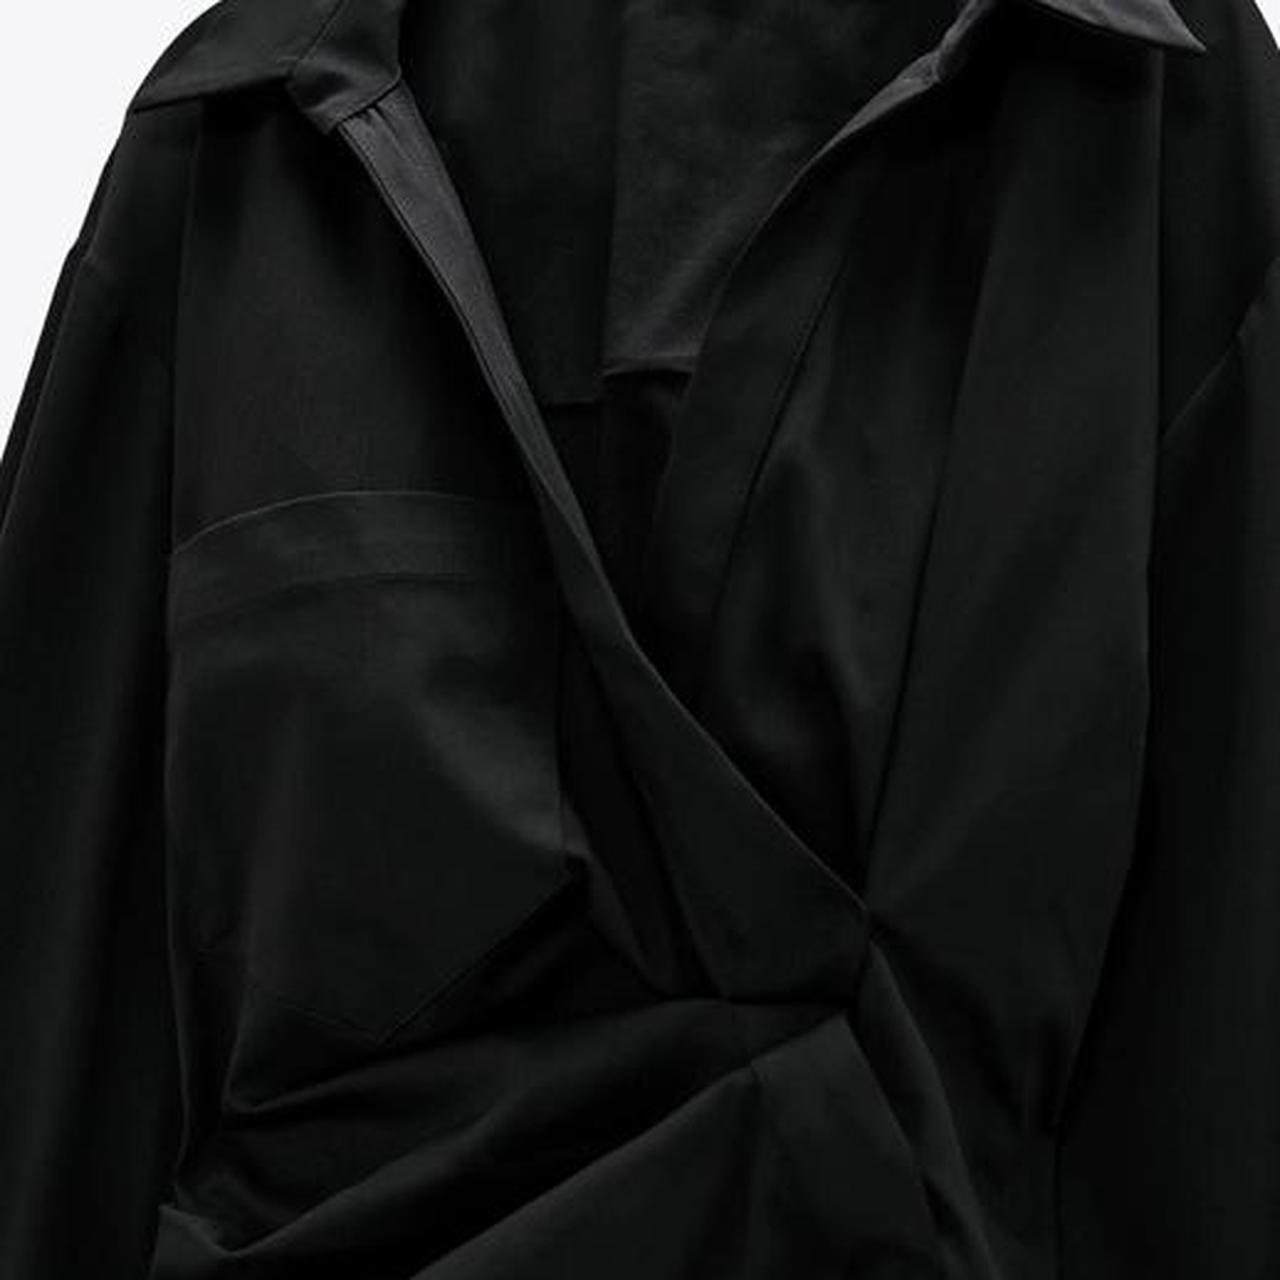 Zara black poplin wrap dress Never worn ...